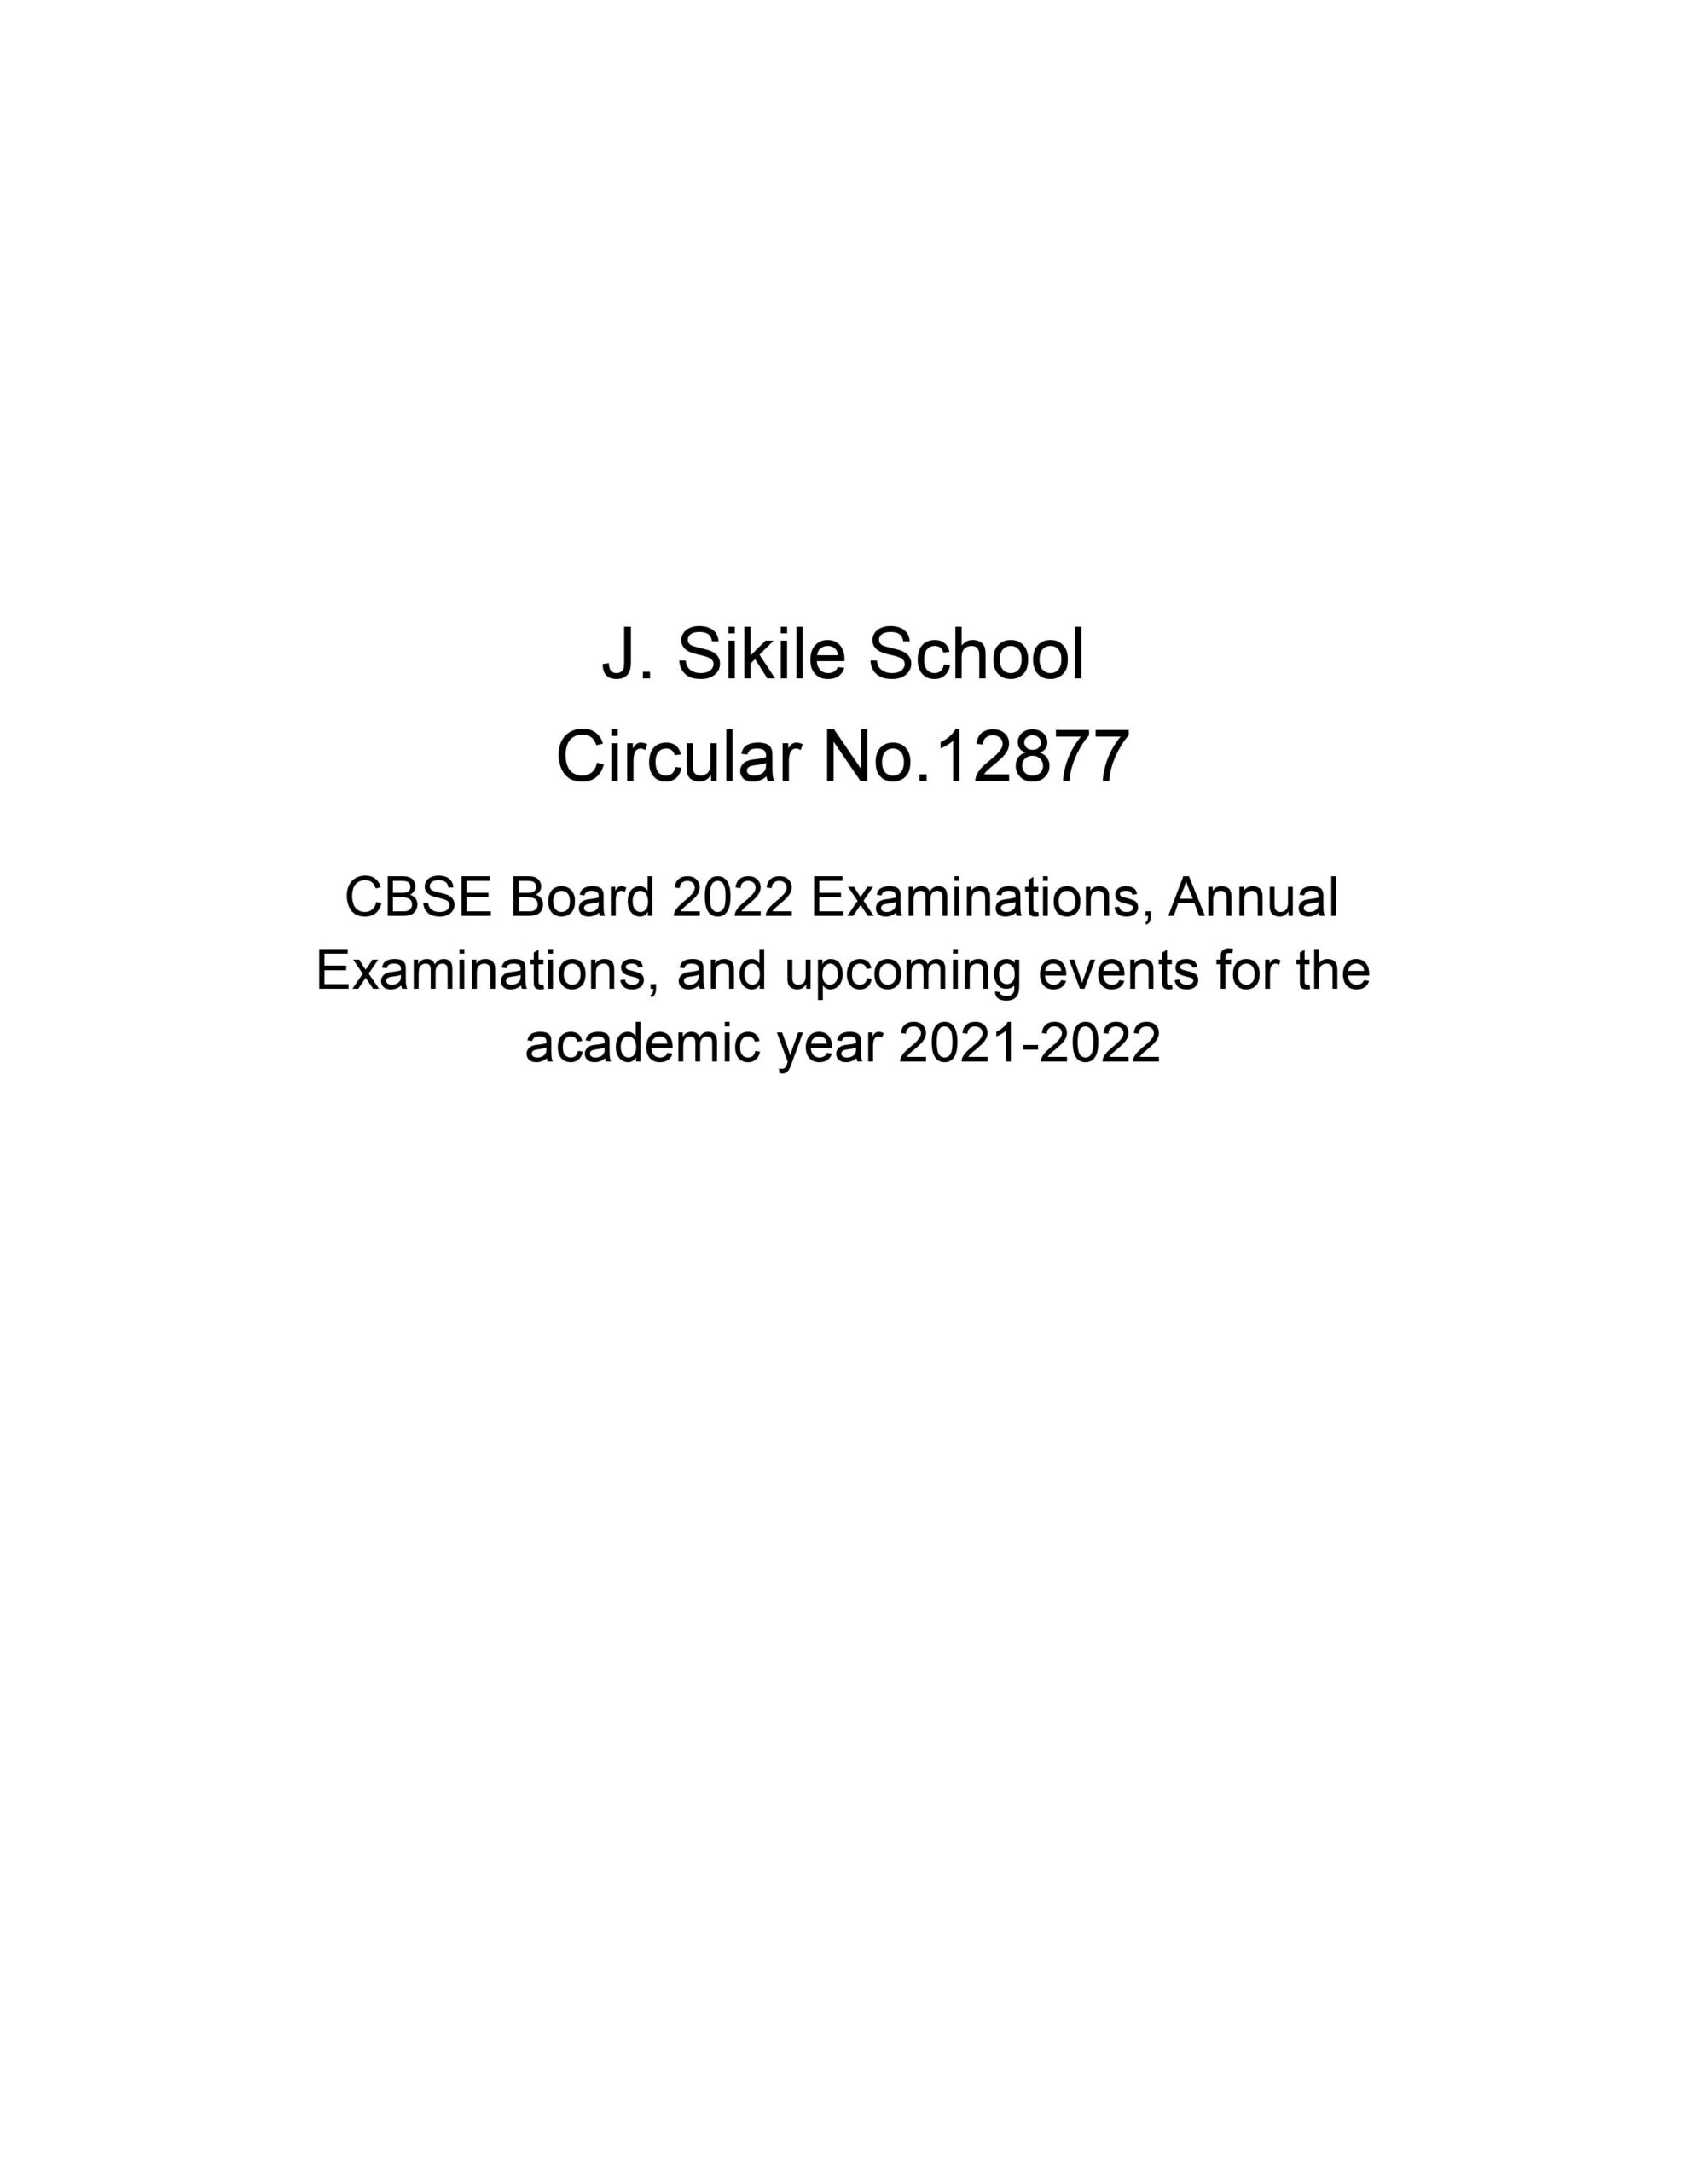 J. Sikile School Circular No.12877